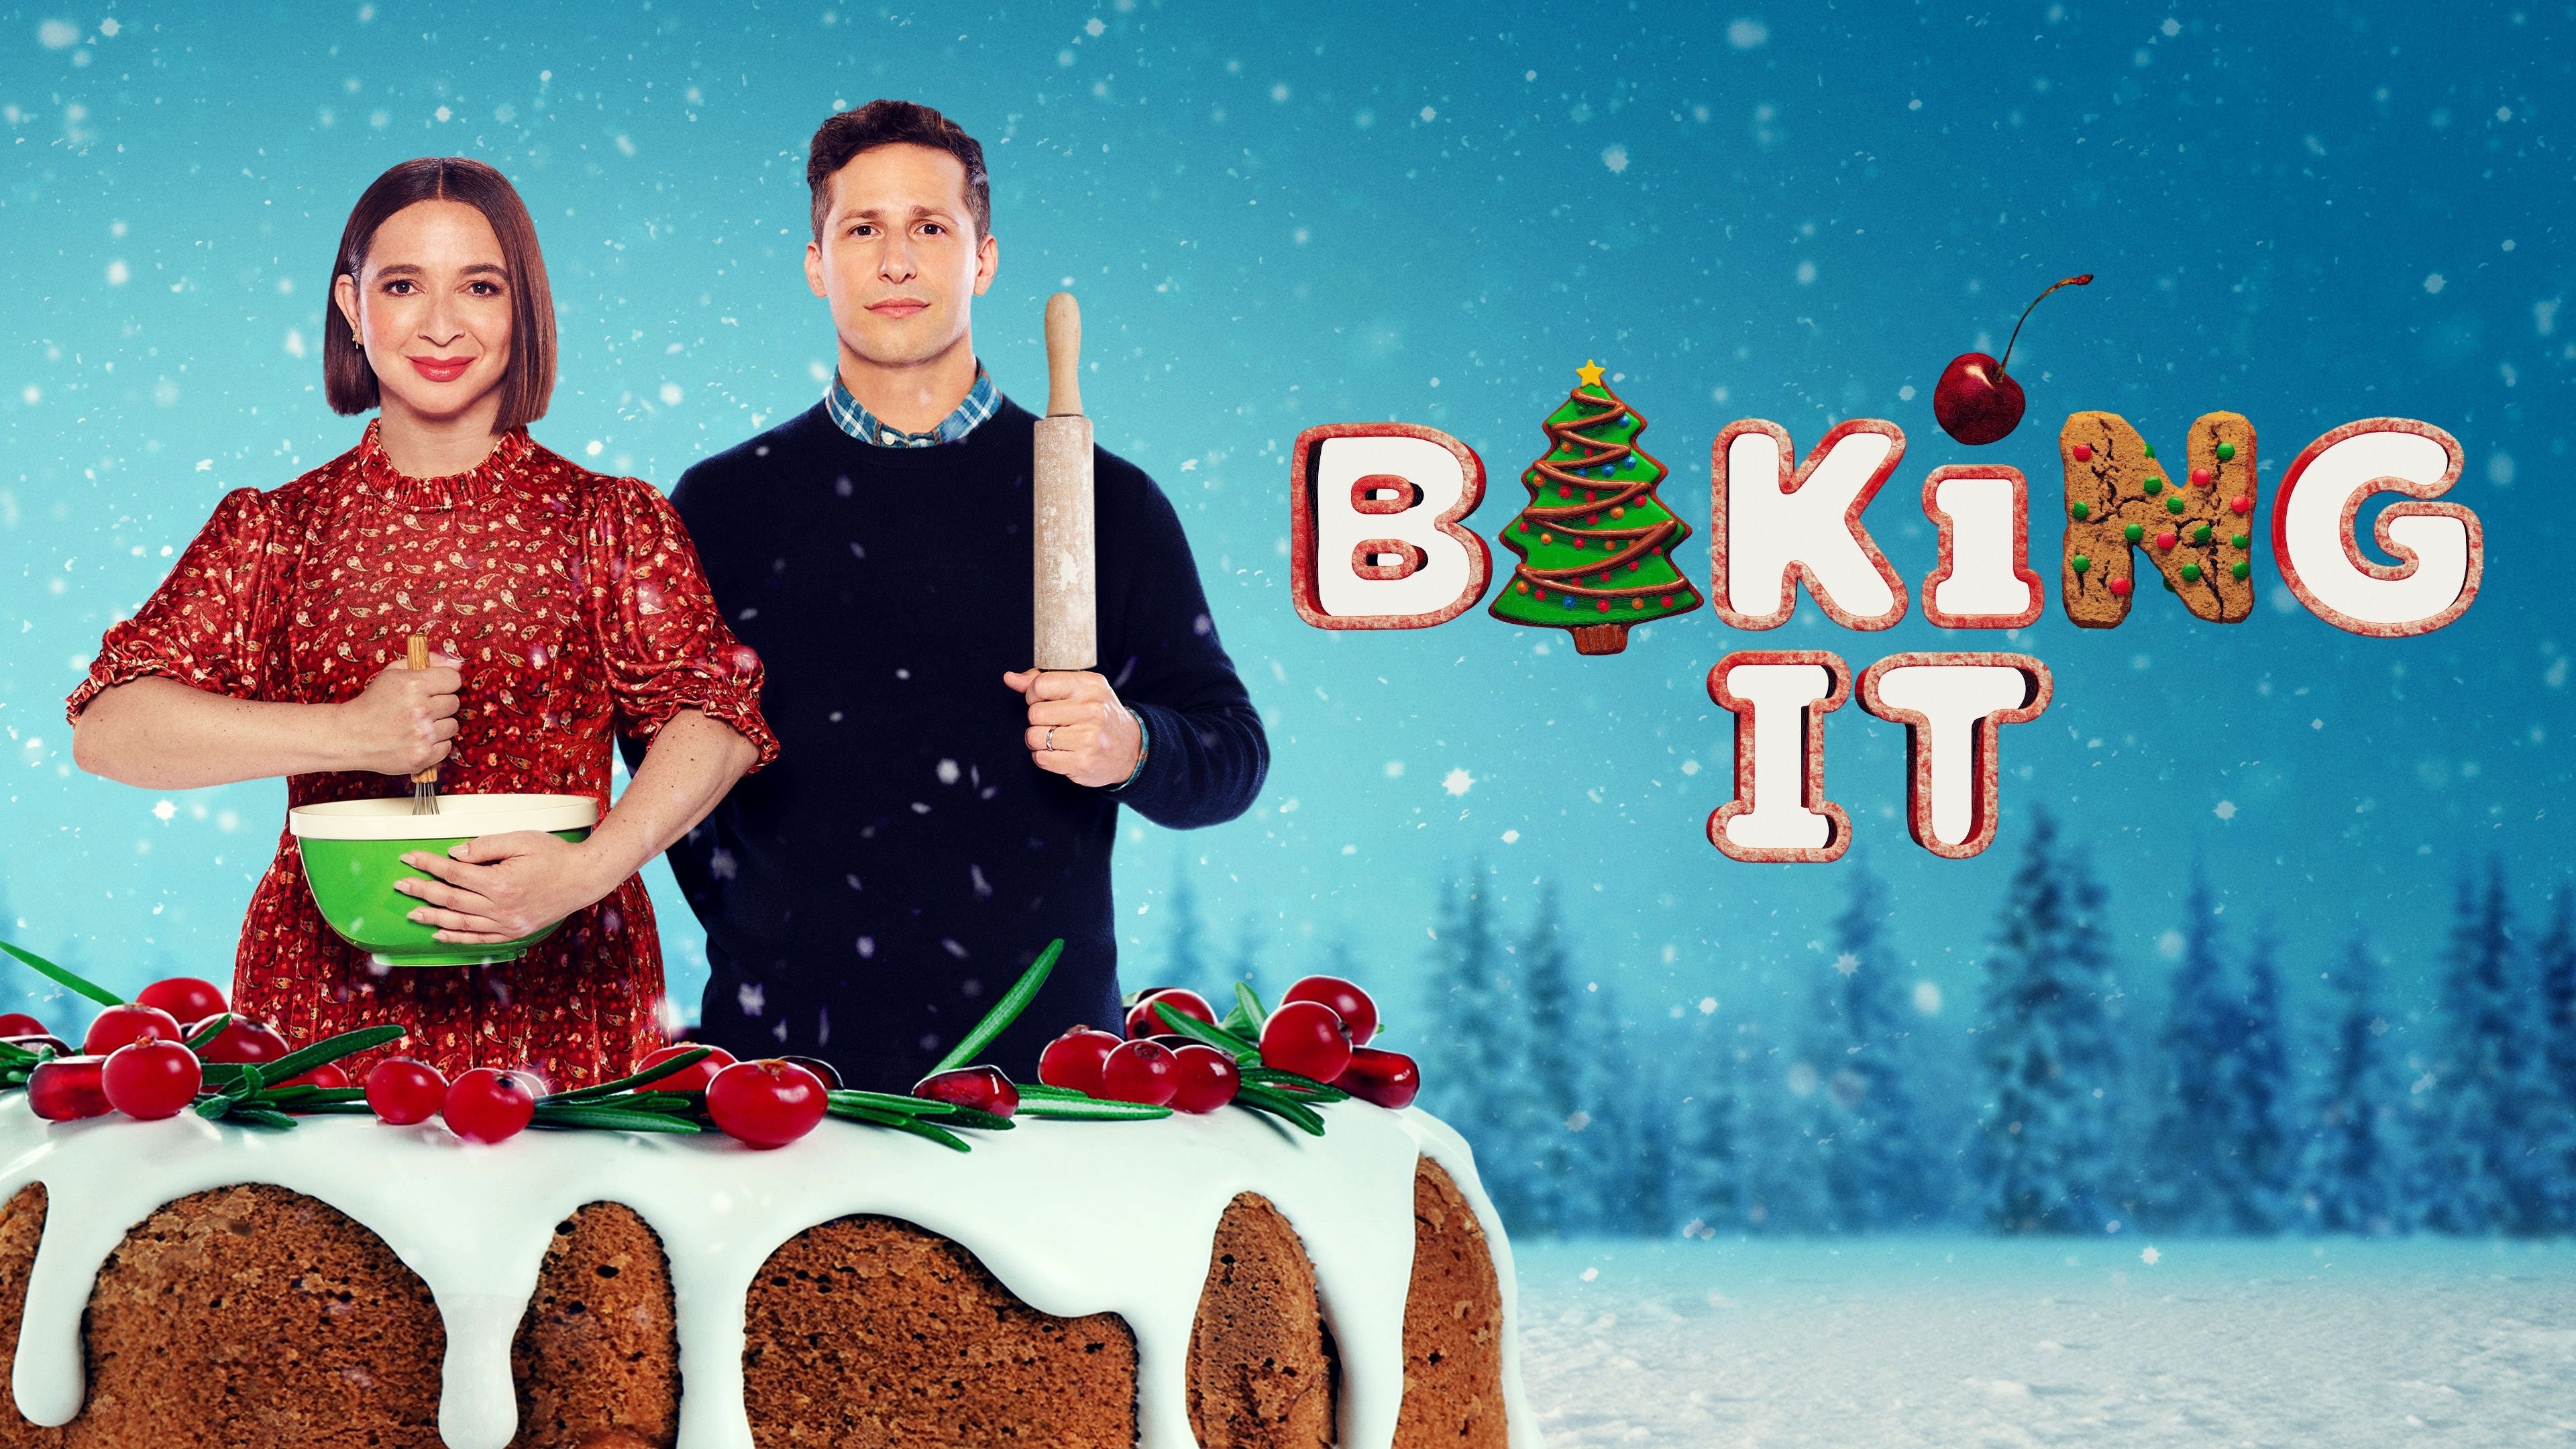 Bake It 'Til You Make It season 1 cast: Where to follow the bakers